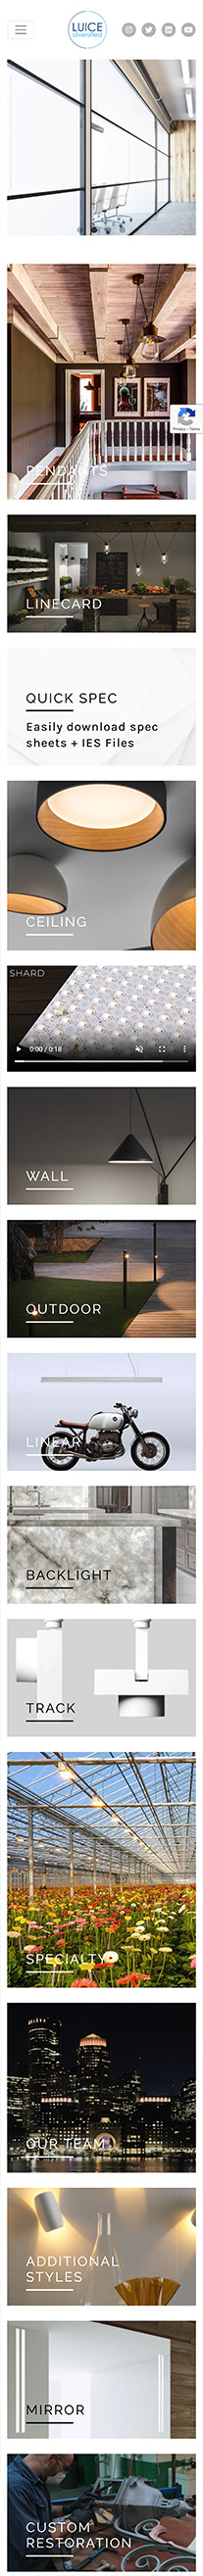 Interior Design Lighting Mobile Web Design Development